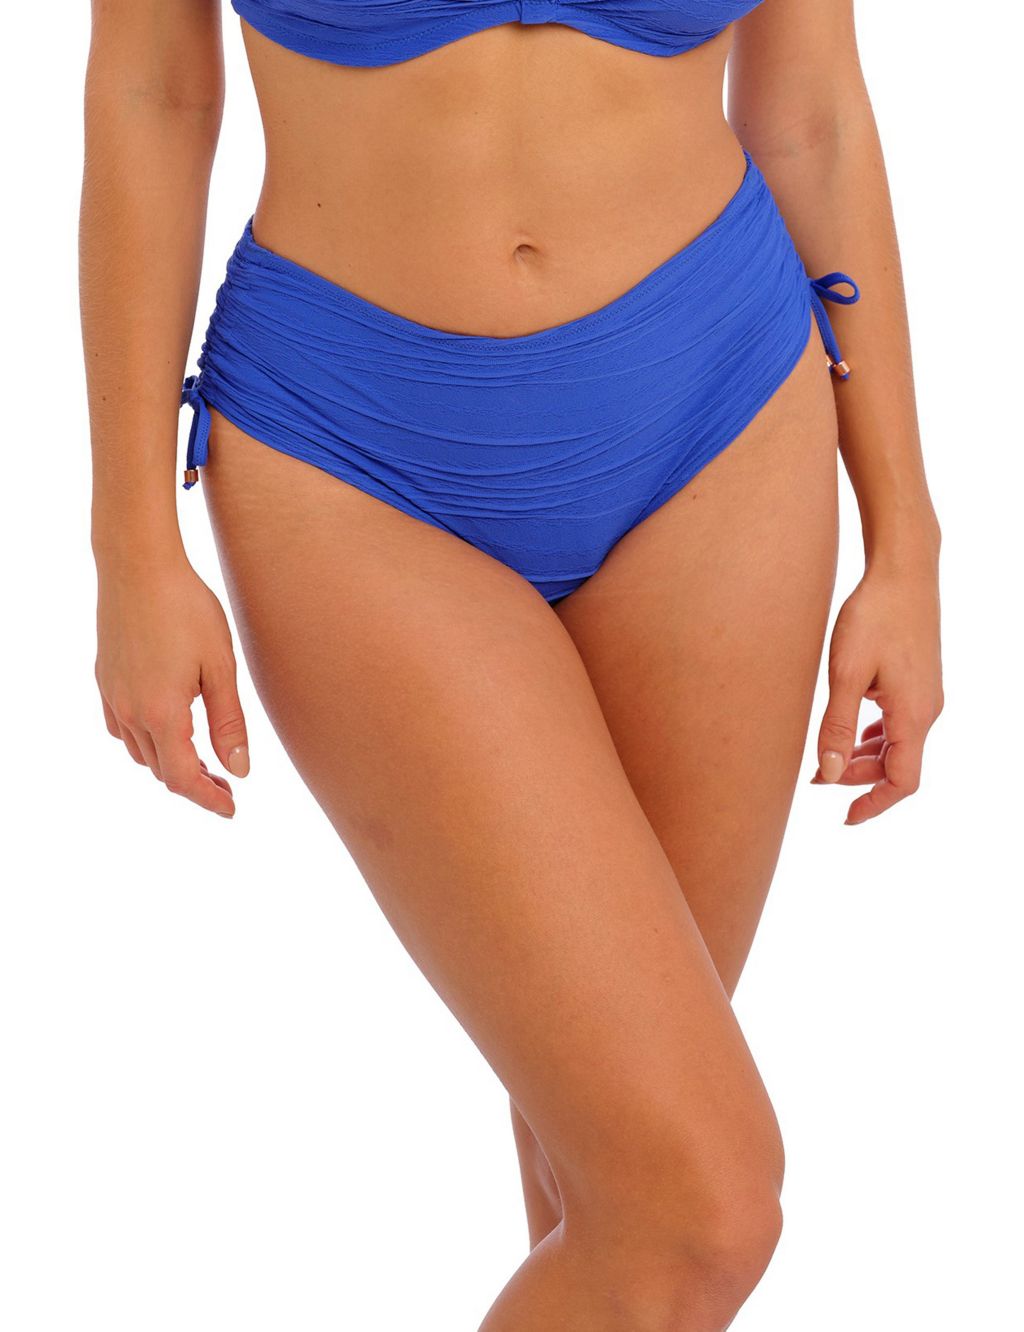 HZMM Swim Bras with Shorts for Women Summer Beach Swimwear Bikini